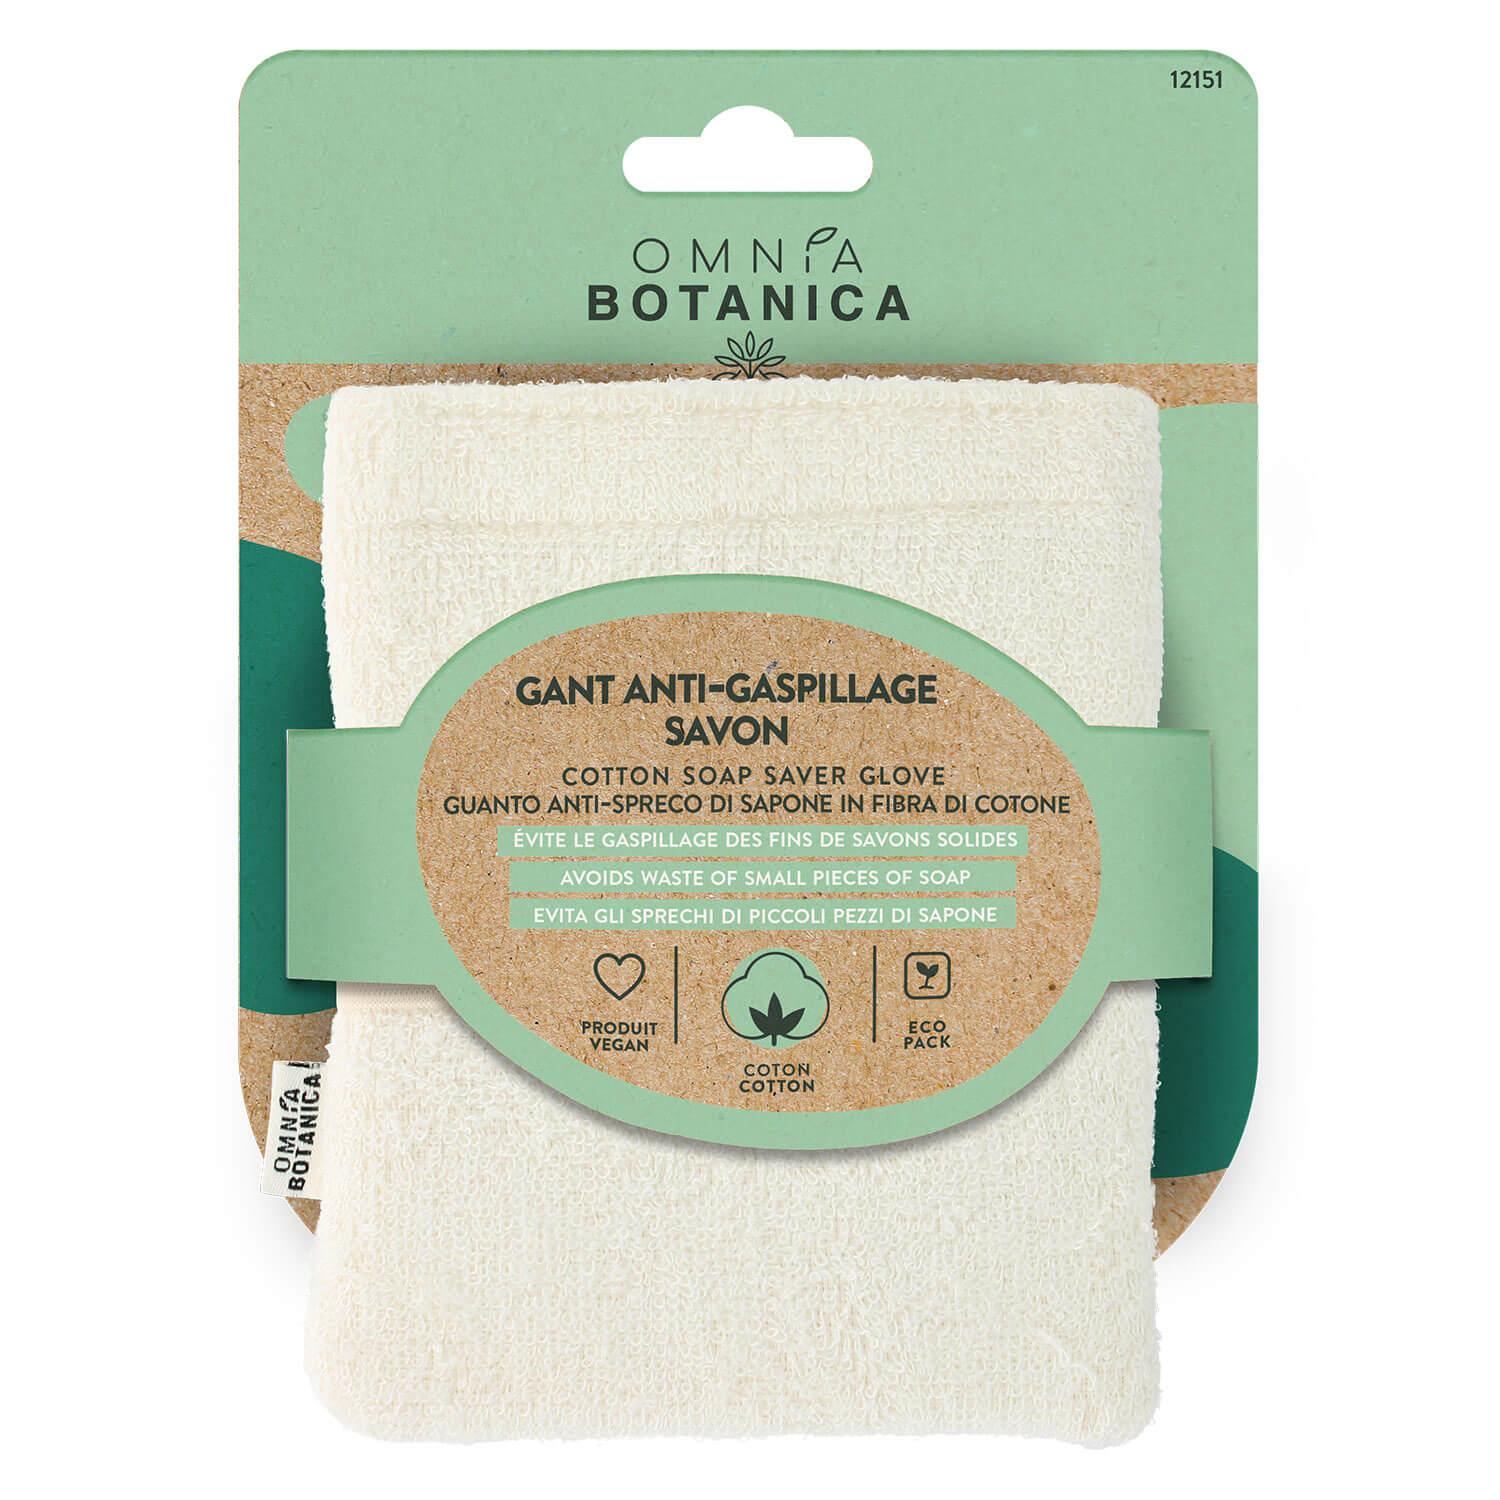 OMNIA BOTANICA - Soap-saving glove